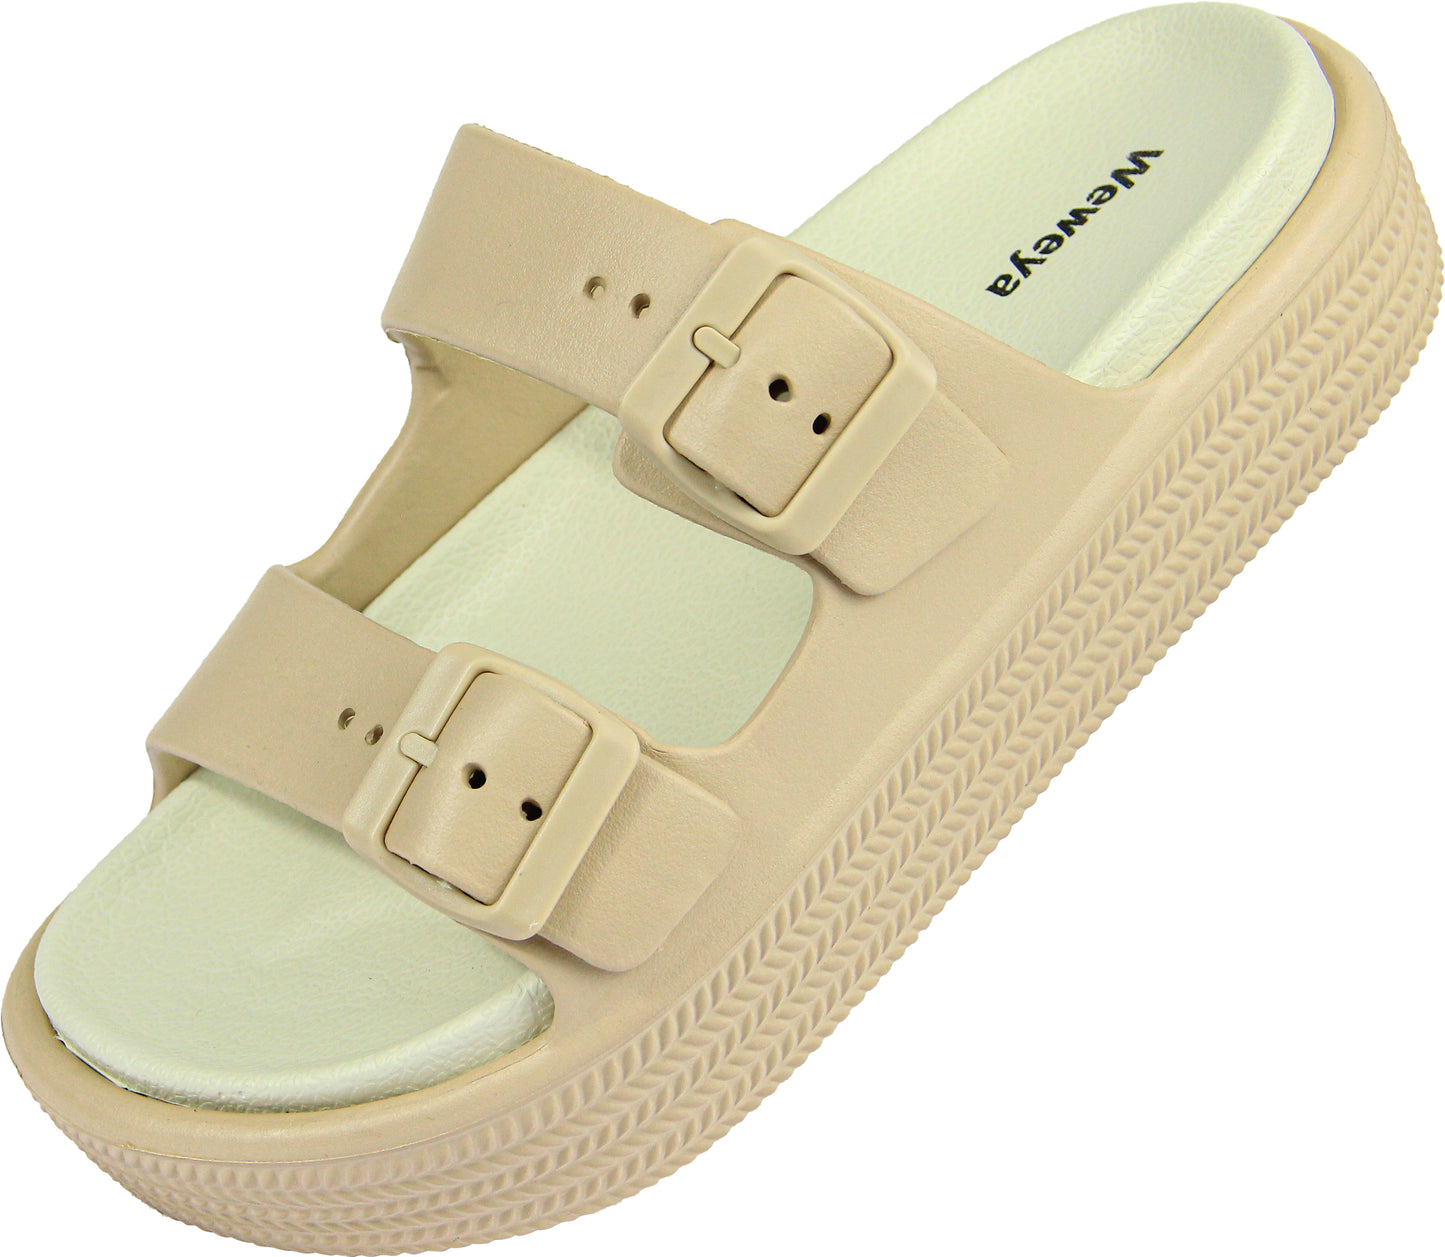 Weweya Platform Sandals for Women - Double Layer Slip On Sandals - Adjustable Buckle Casual Sandals